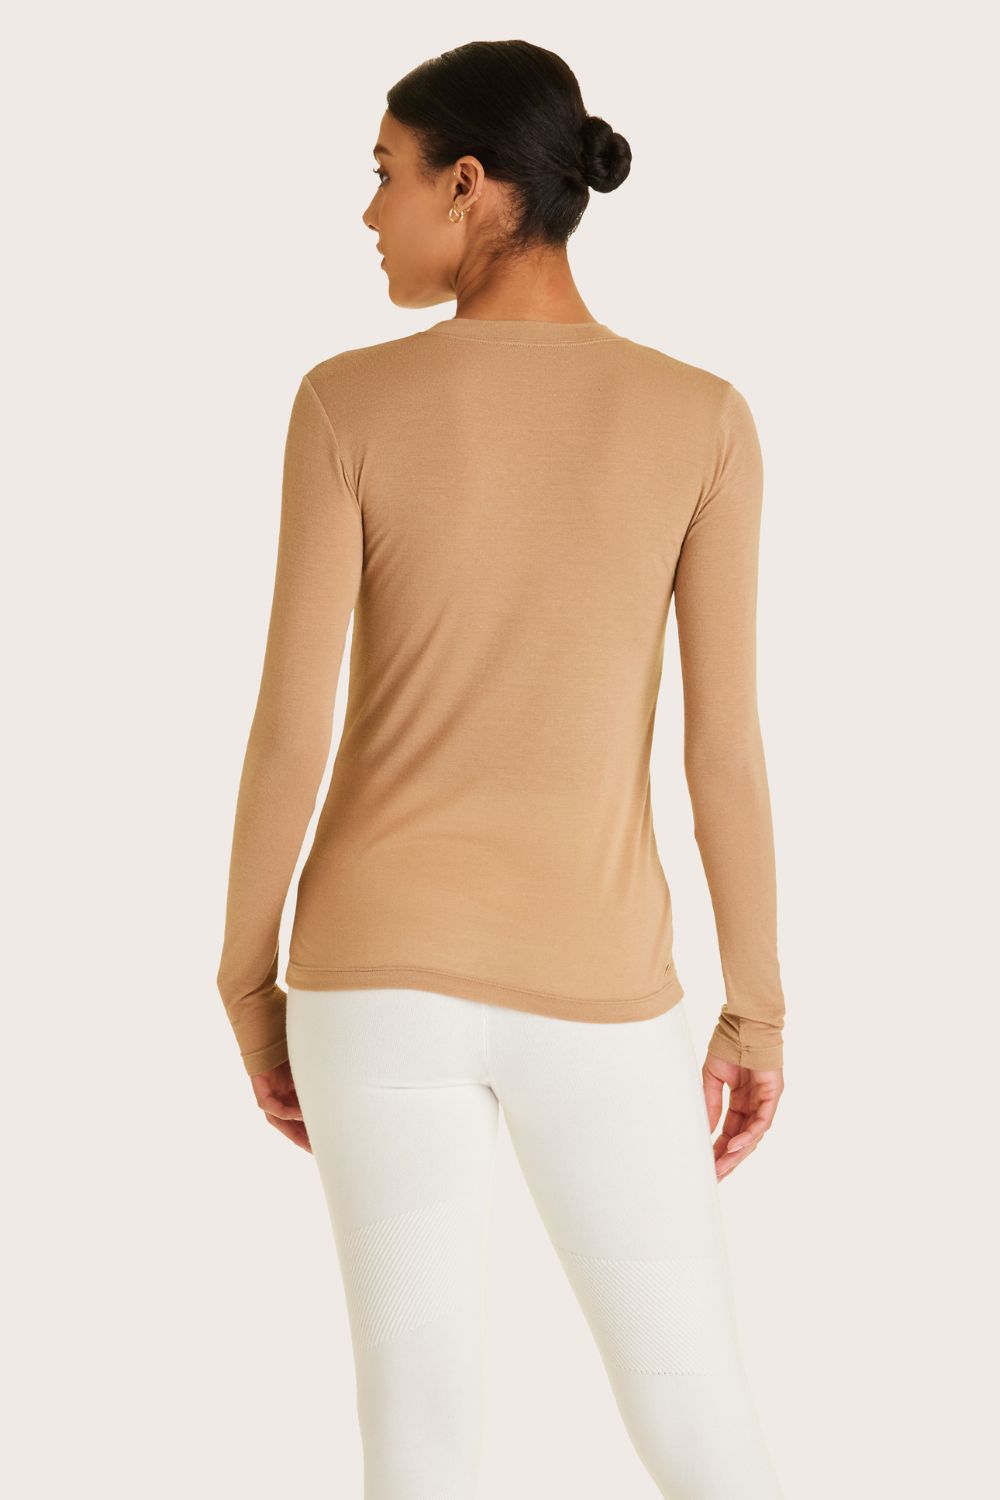 Alala women's cashmere crewneck long sleeve top in beige